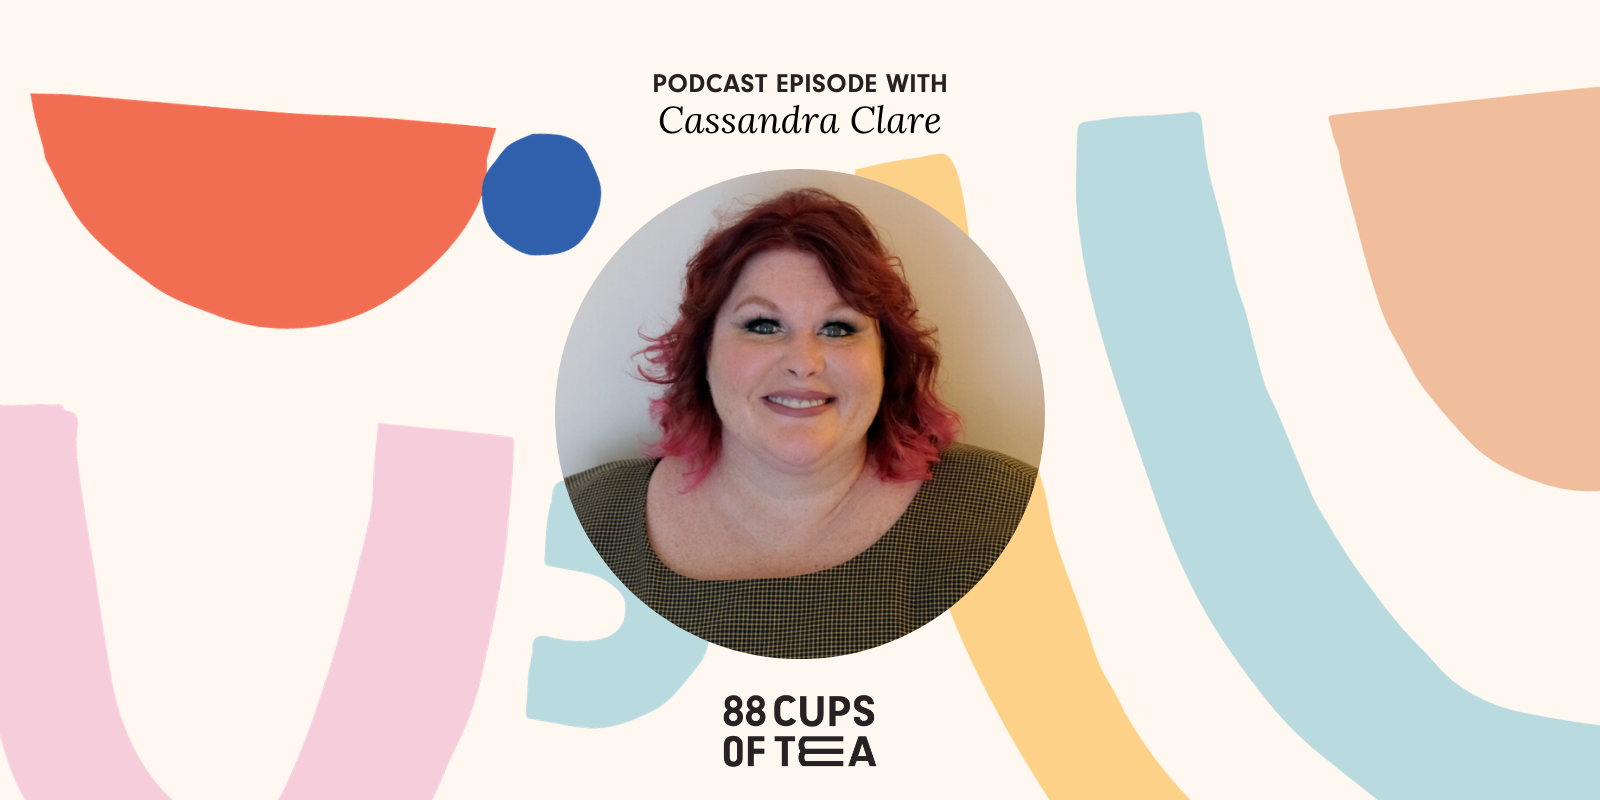 Cassandra Clare on Finding Creativity